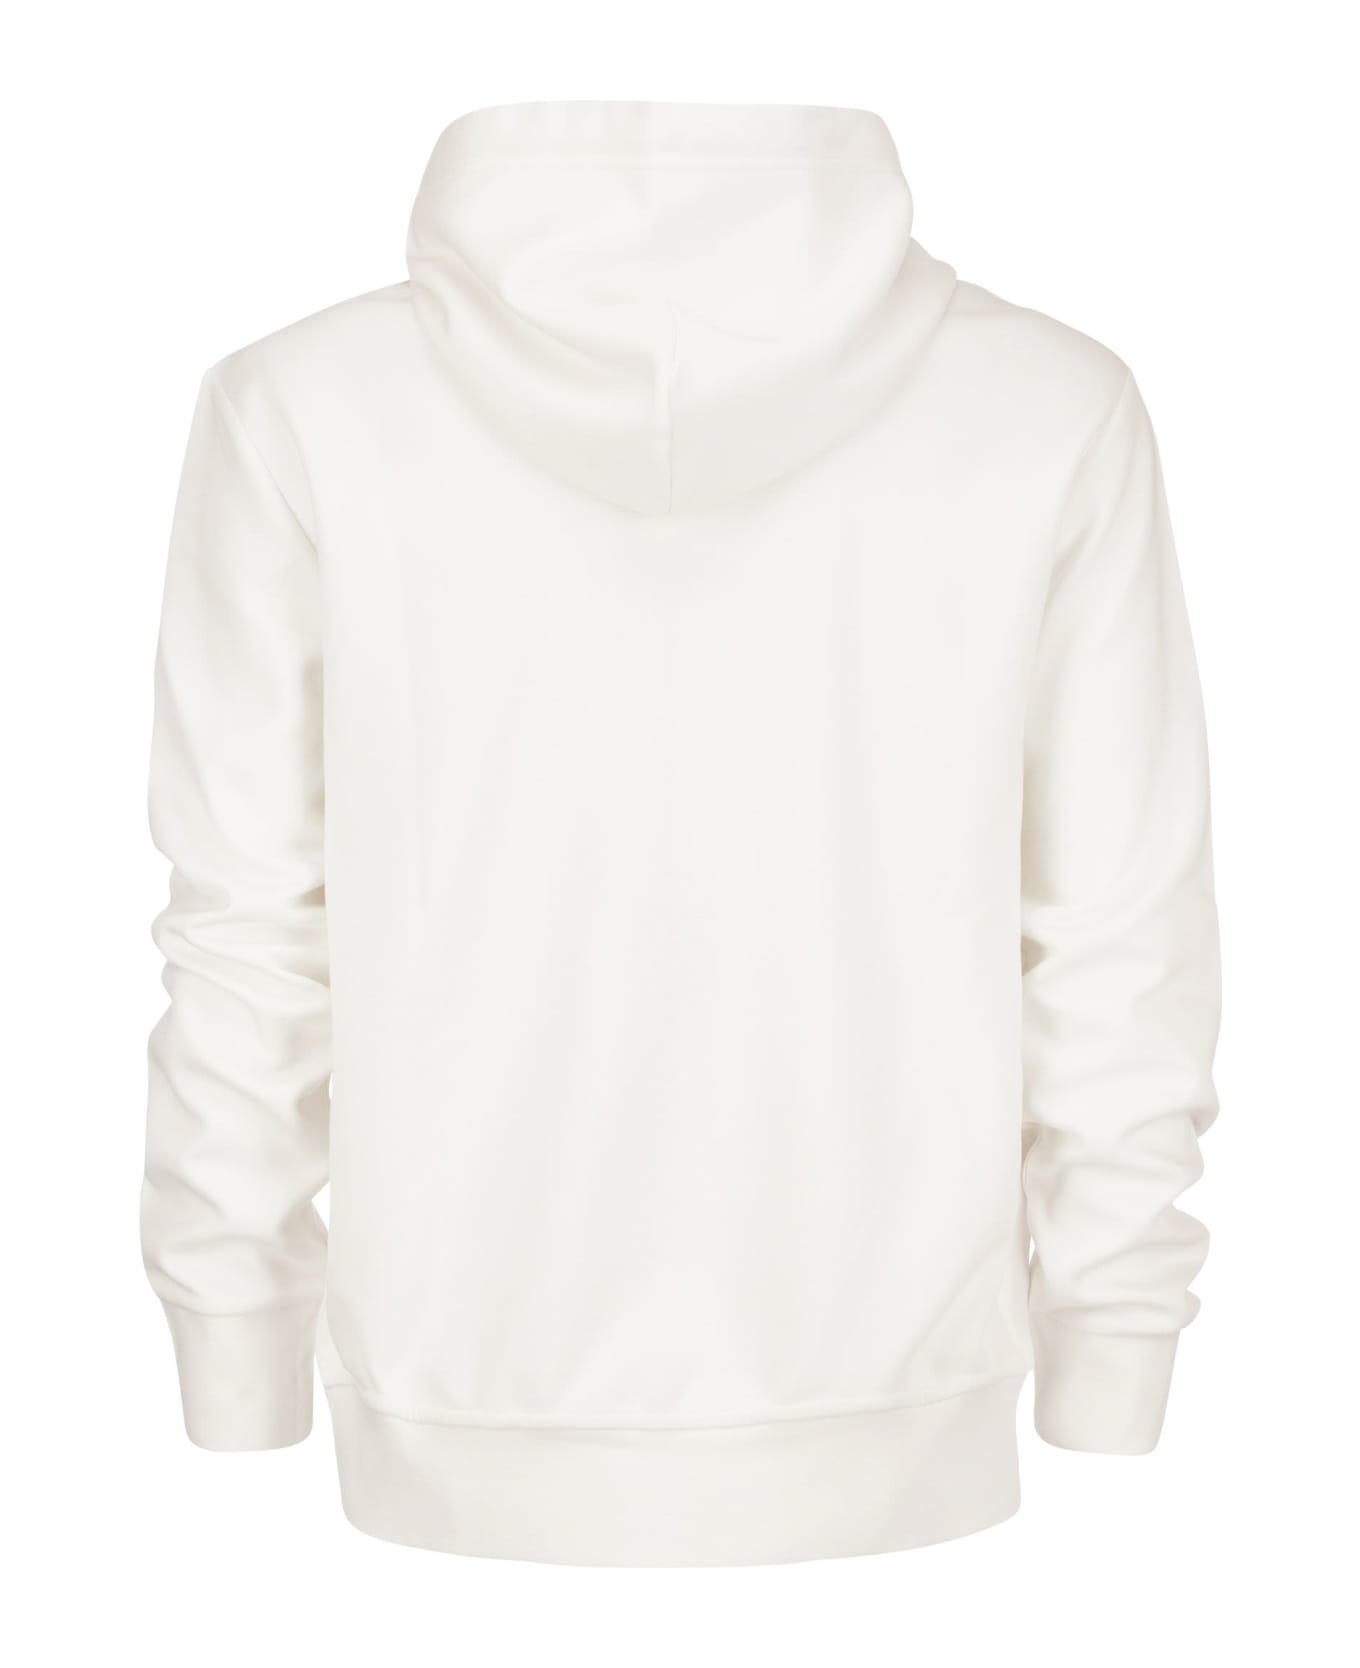 Ralph Lauren Hooded Sweatshirt - white